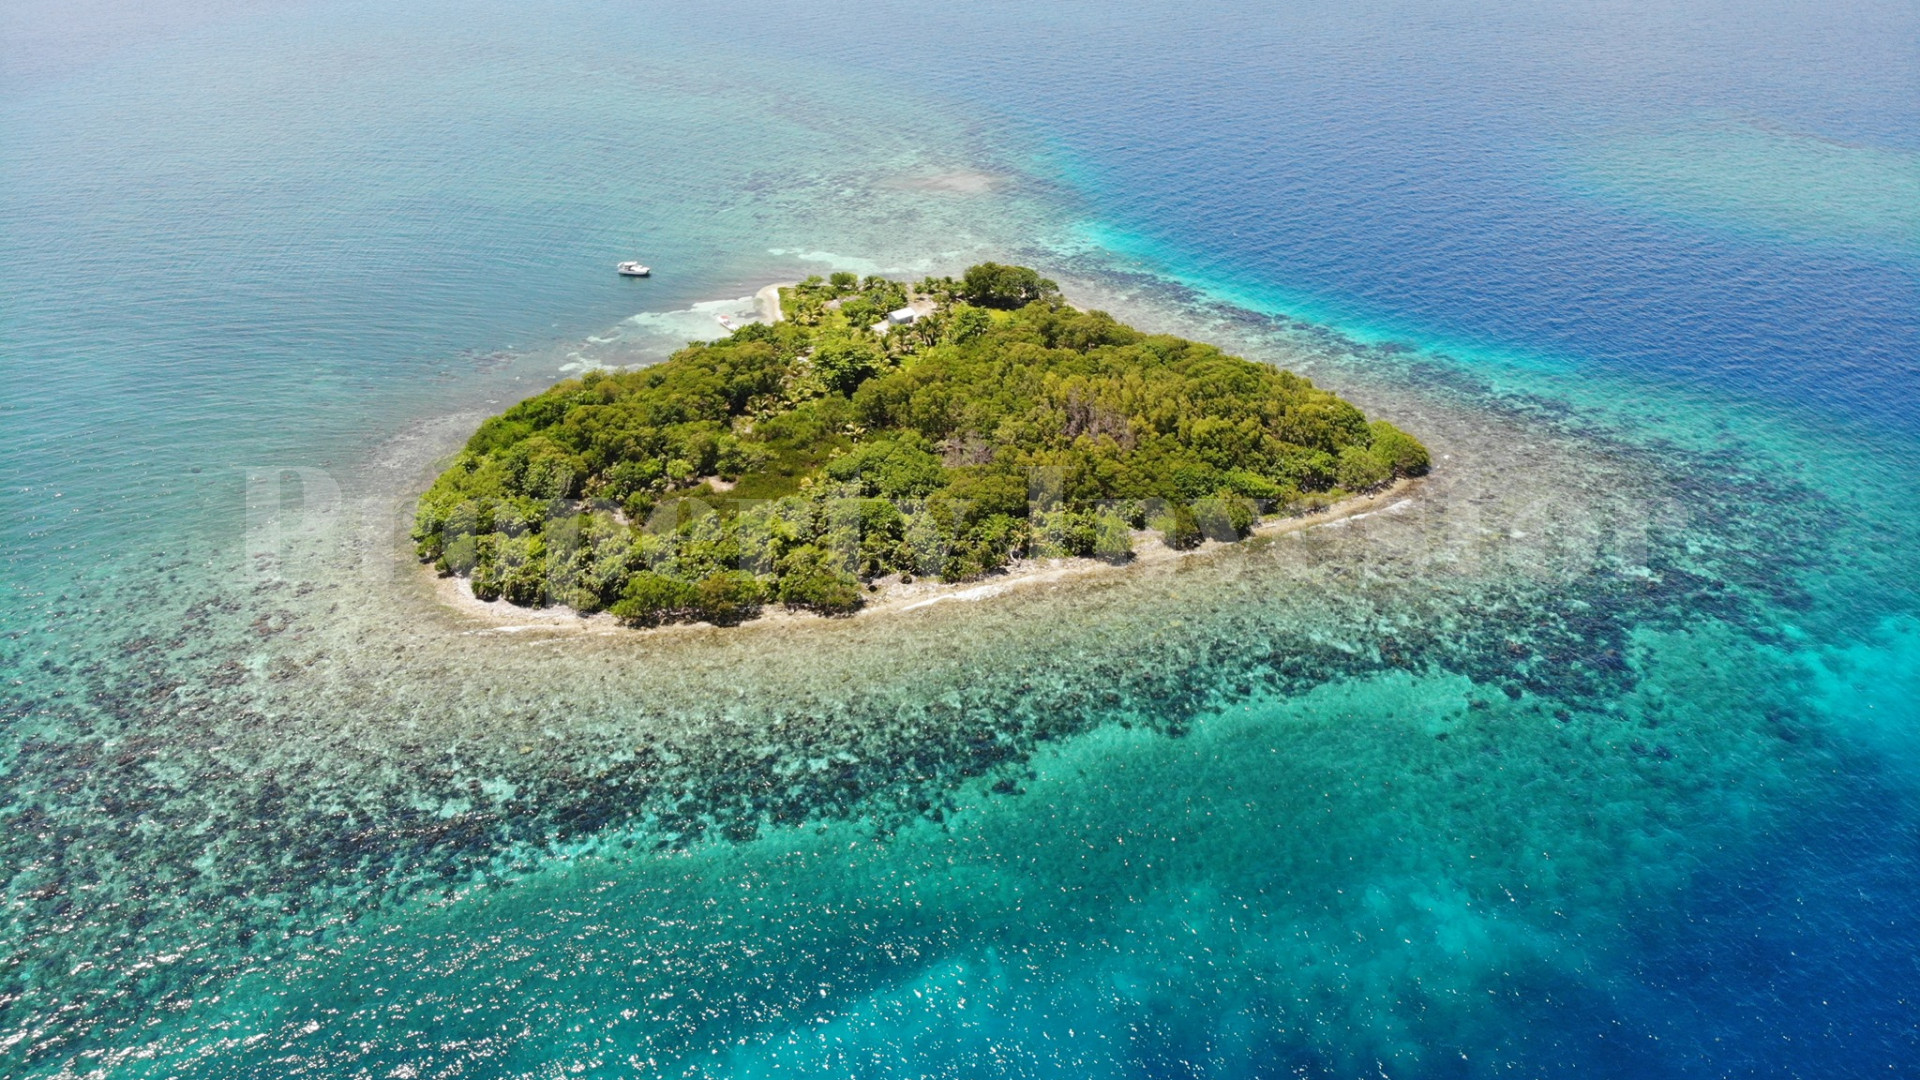 1.82 Hectare Private Coral Island for Sale Near Placencia Village, Belize